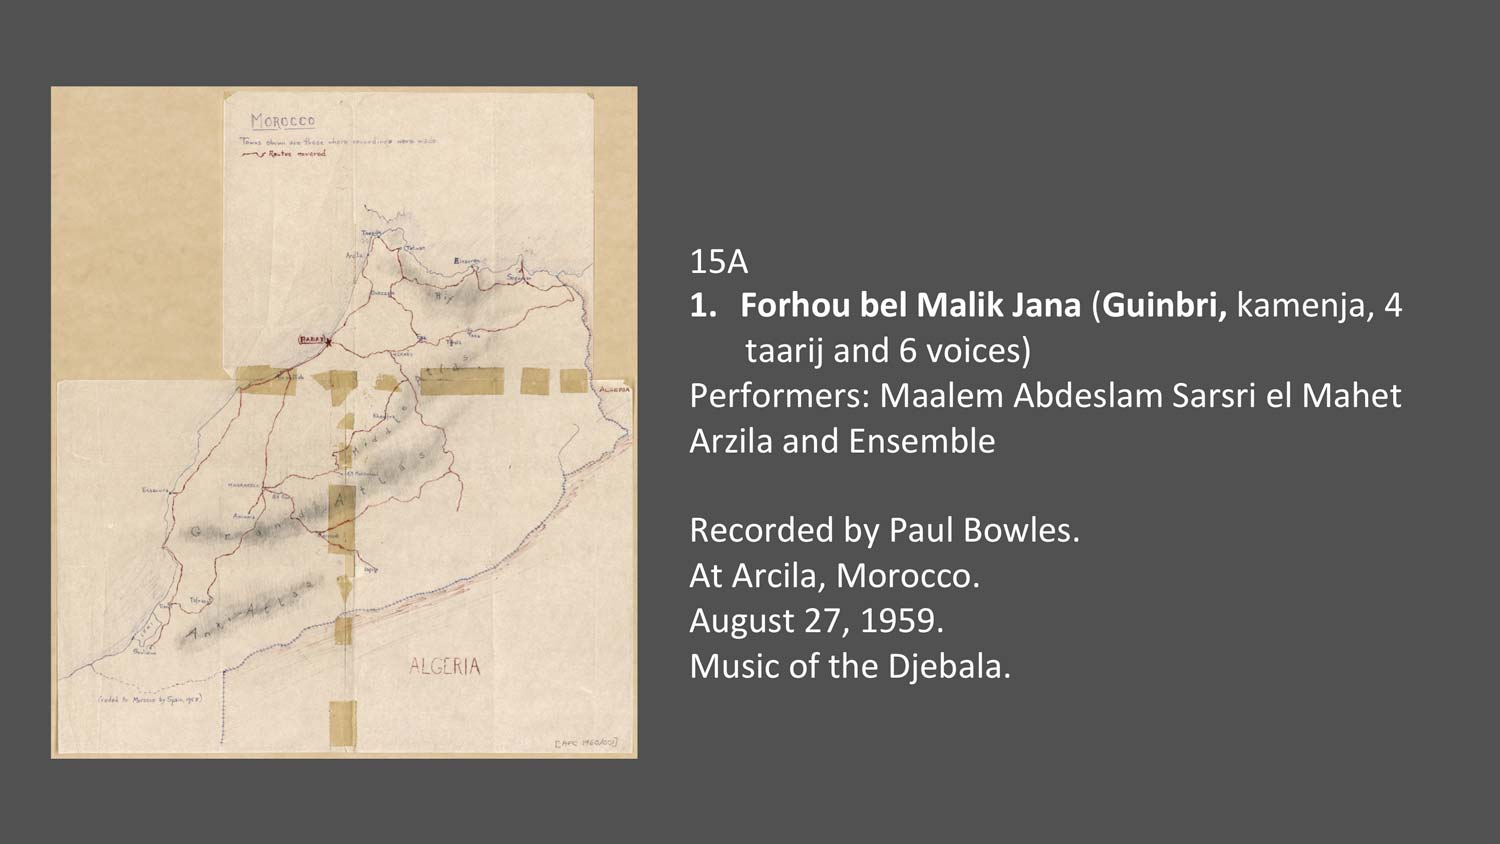 15A
Forhou bel Malik Jana (Guinbri, kamenja, 4 taarij and 6 voices)
Performers: Maalem Abdeslam Sarsri el Mahet Arzila and Ensemble

Recorded by Paul Bowles.
At Arcila, Morocco.
August 27, 1959.
Music of the Djebala.
